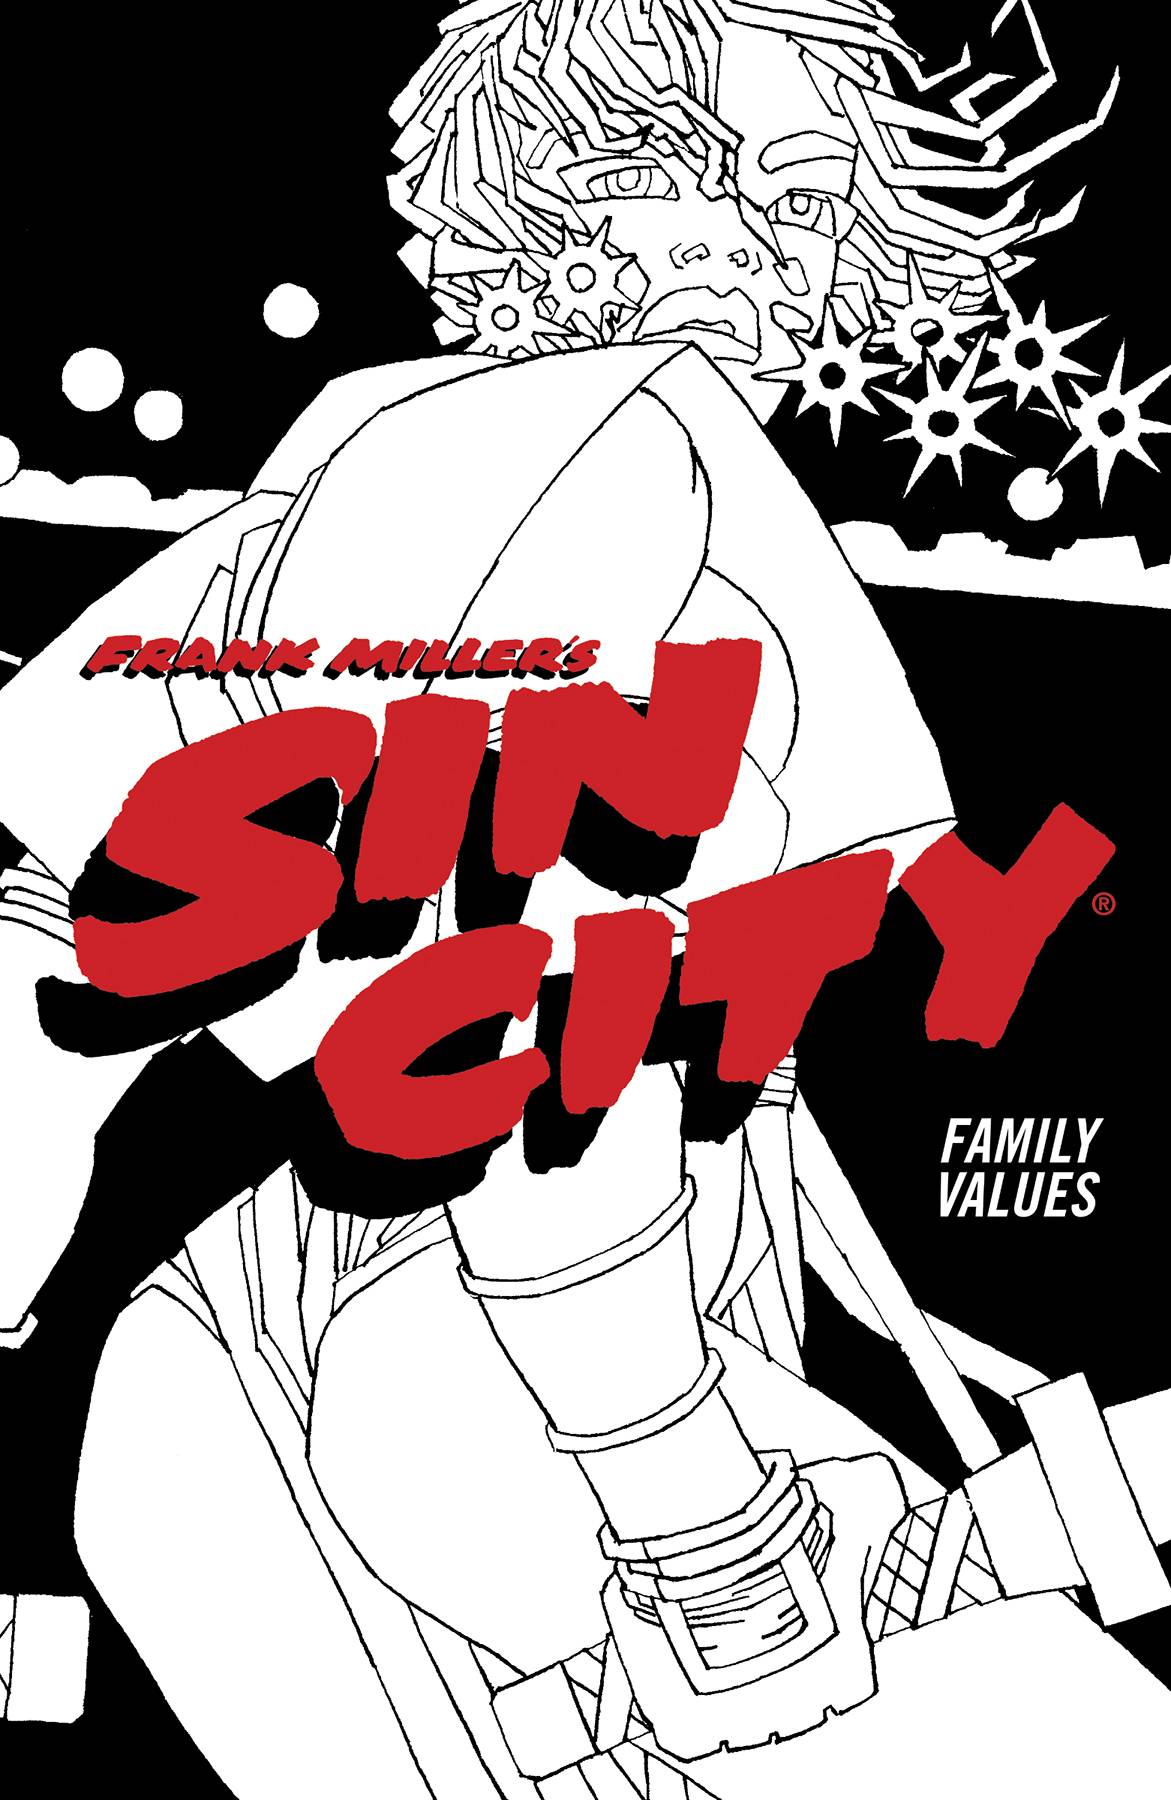 Sin City vol 5: Family Values s/c